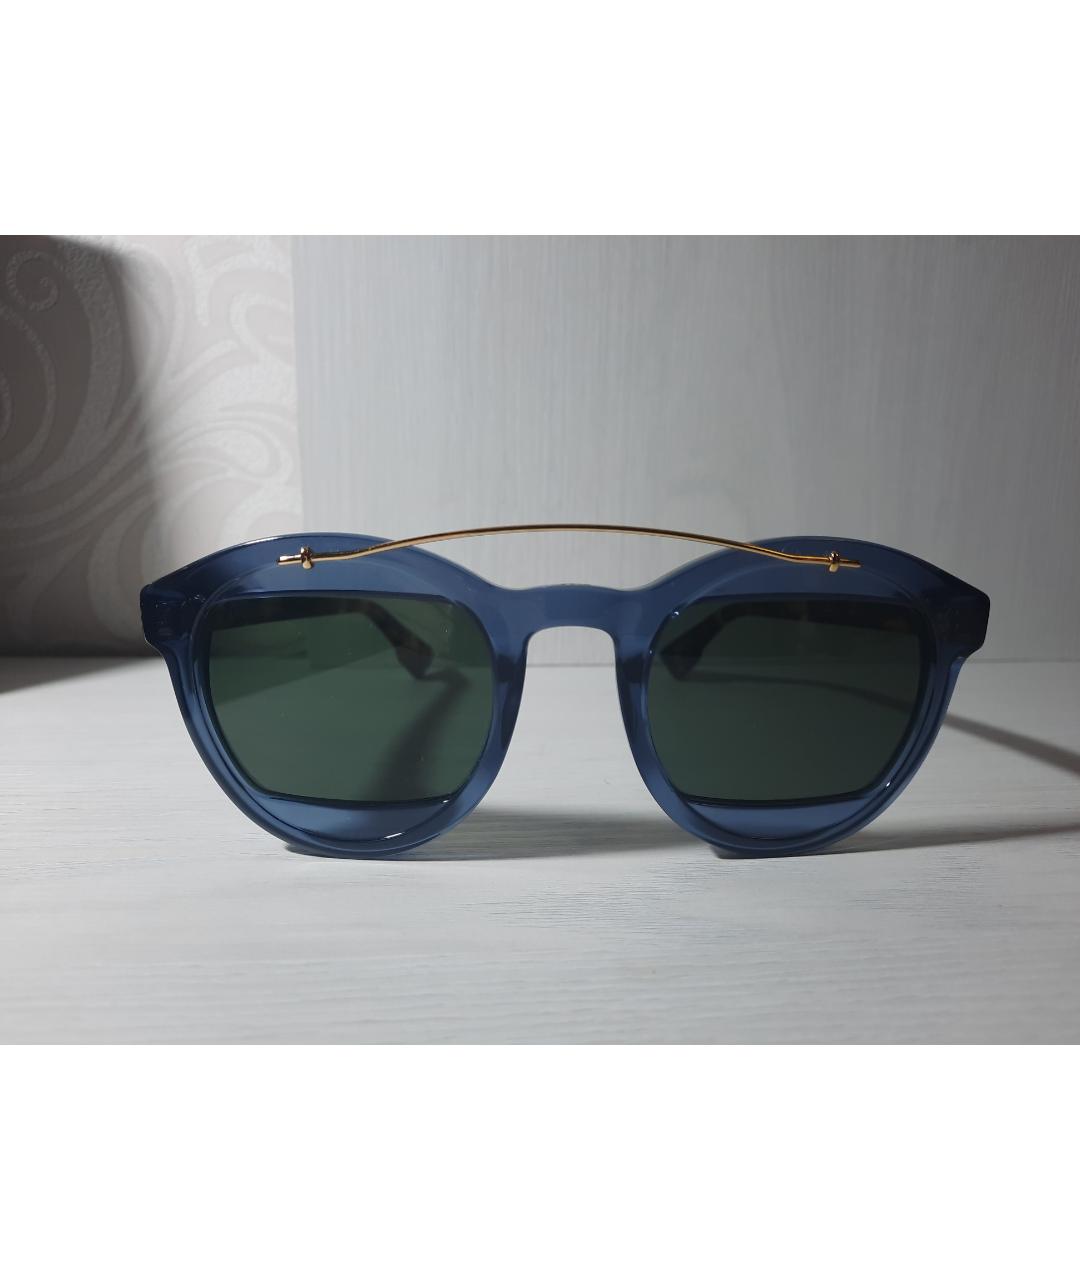 DIOR HOMME Темно-синие пластиковые солнцезащитные очки, фото 8